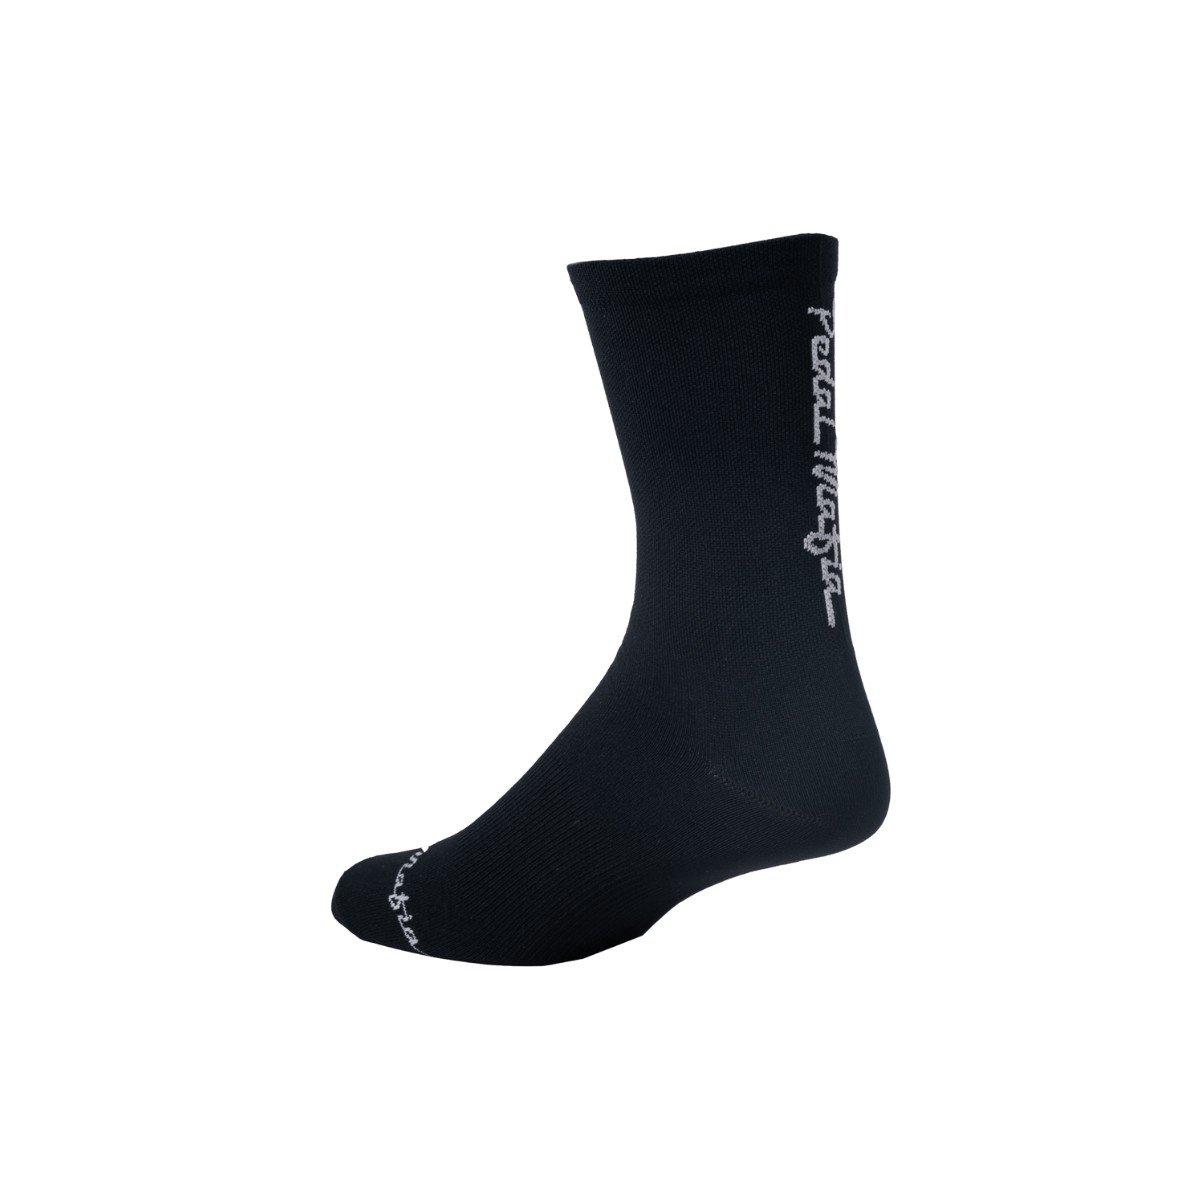 Mafia Pro 2.0 Pedal Socks Black White, Size L/XL